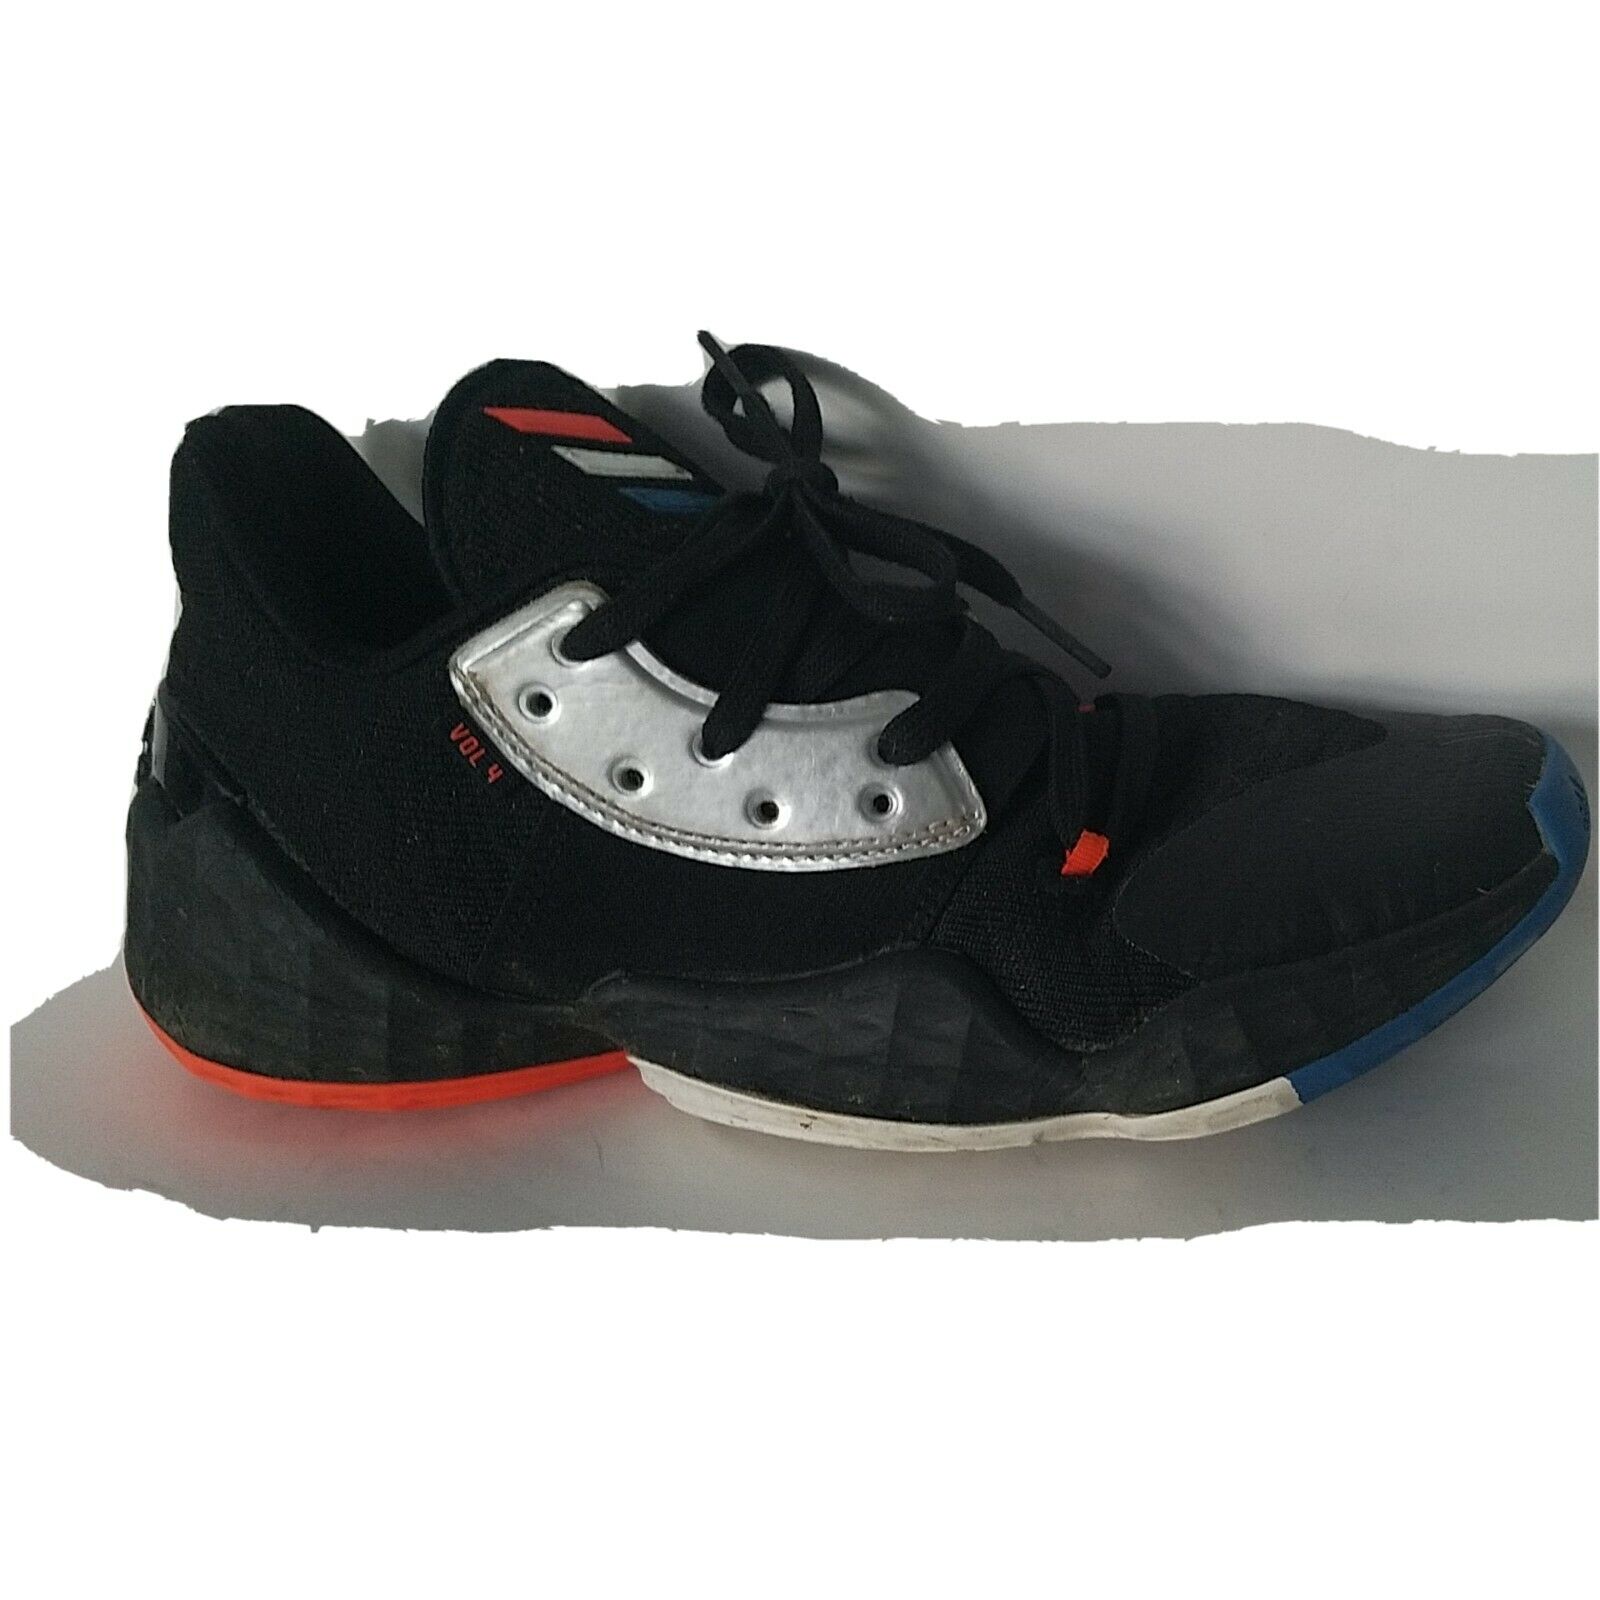 Men's boys size 6 black Adidas Harden Vol 4 athletic tennis shoes